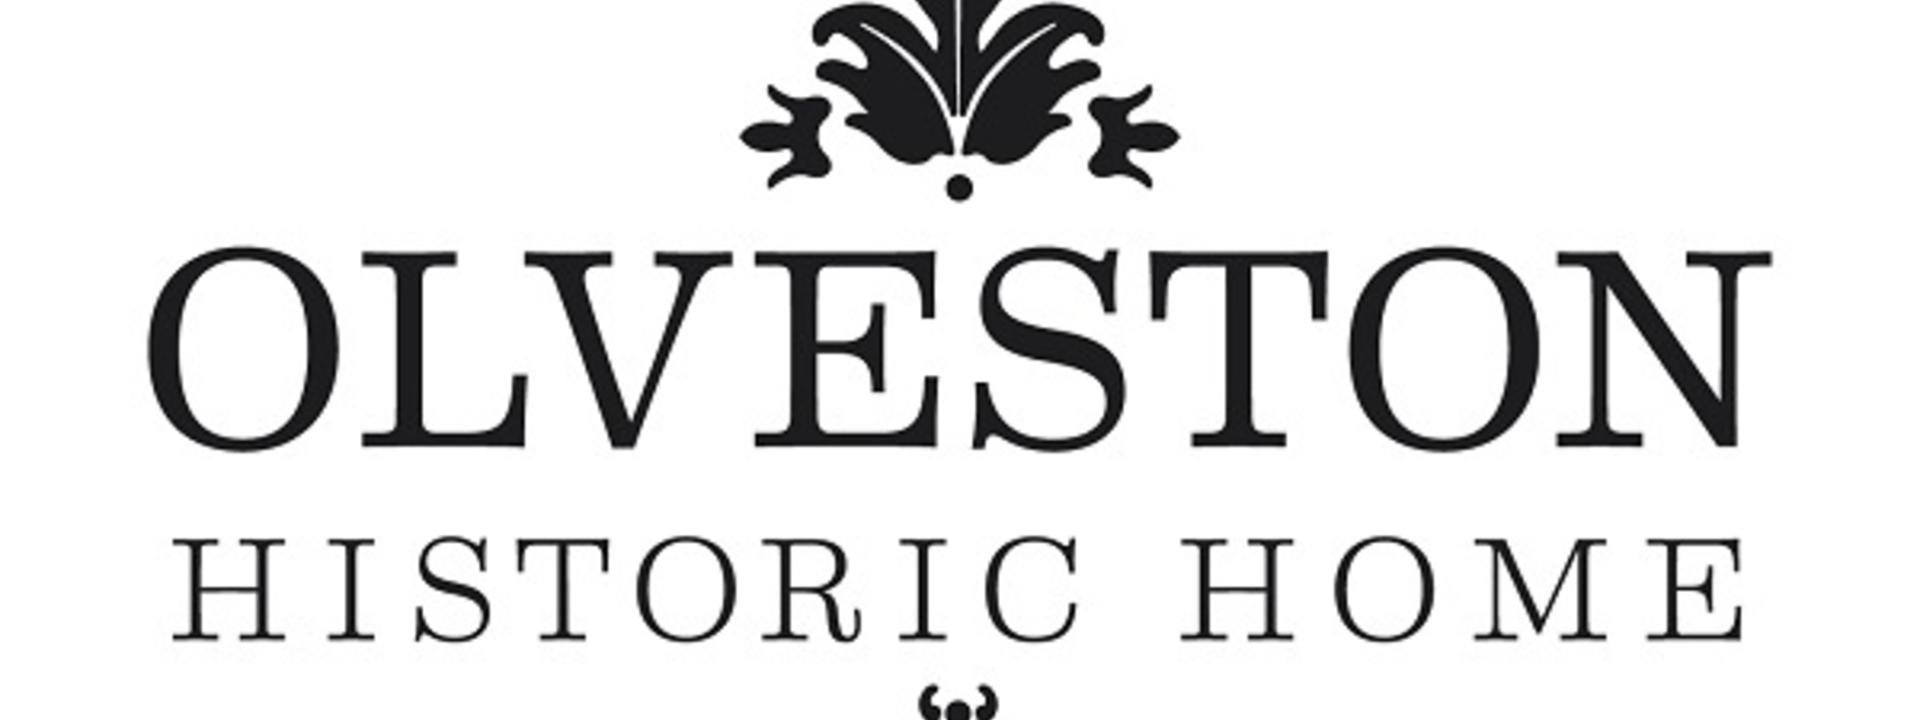 POlveston Historic Home logo.jpeg